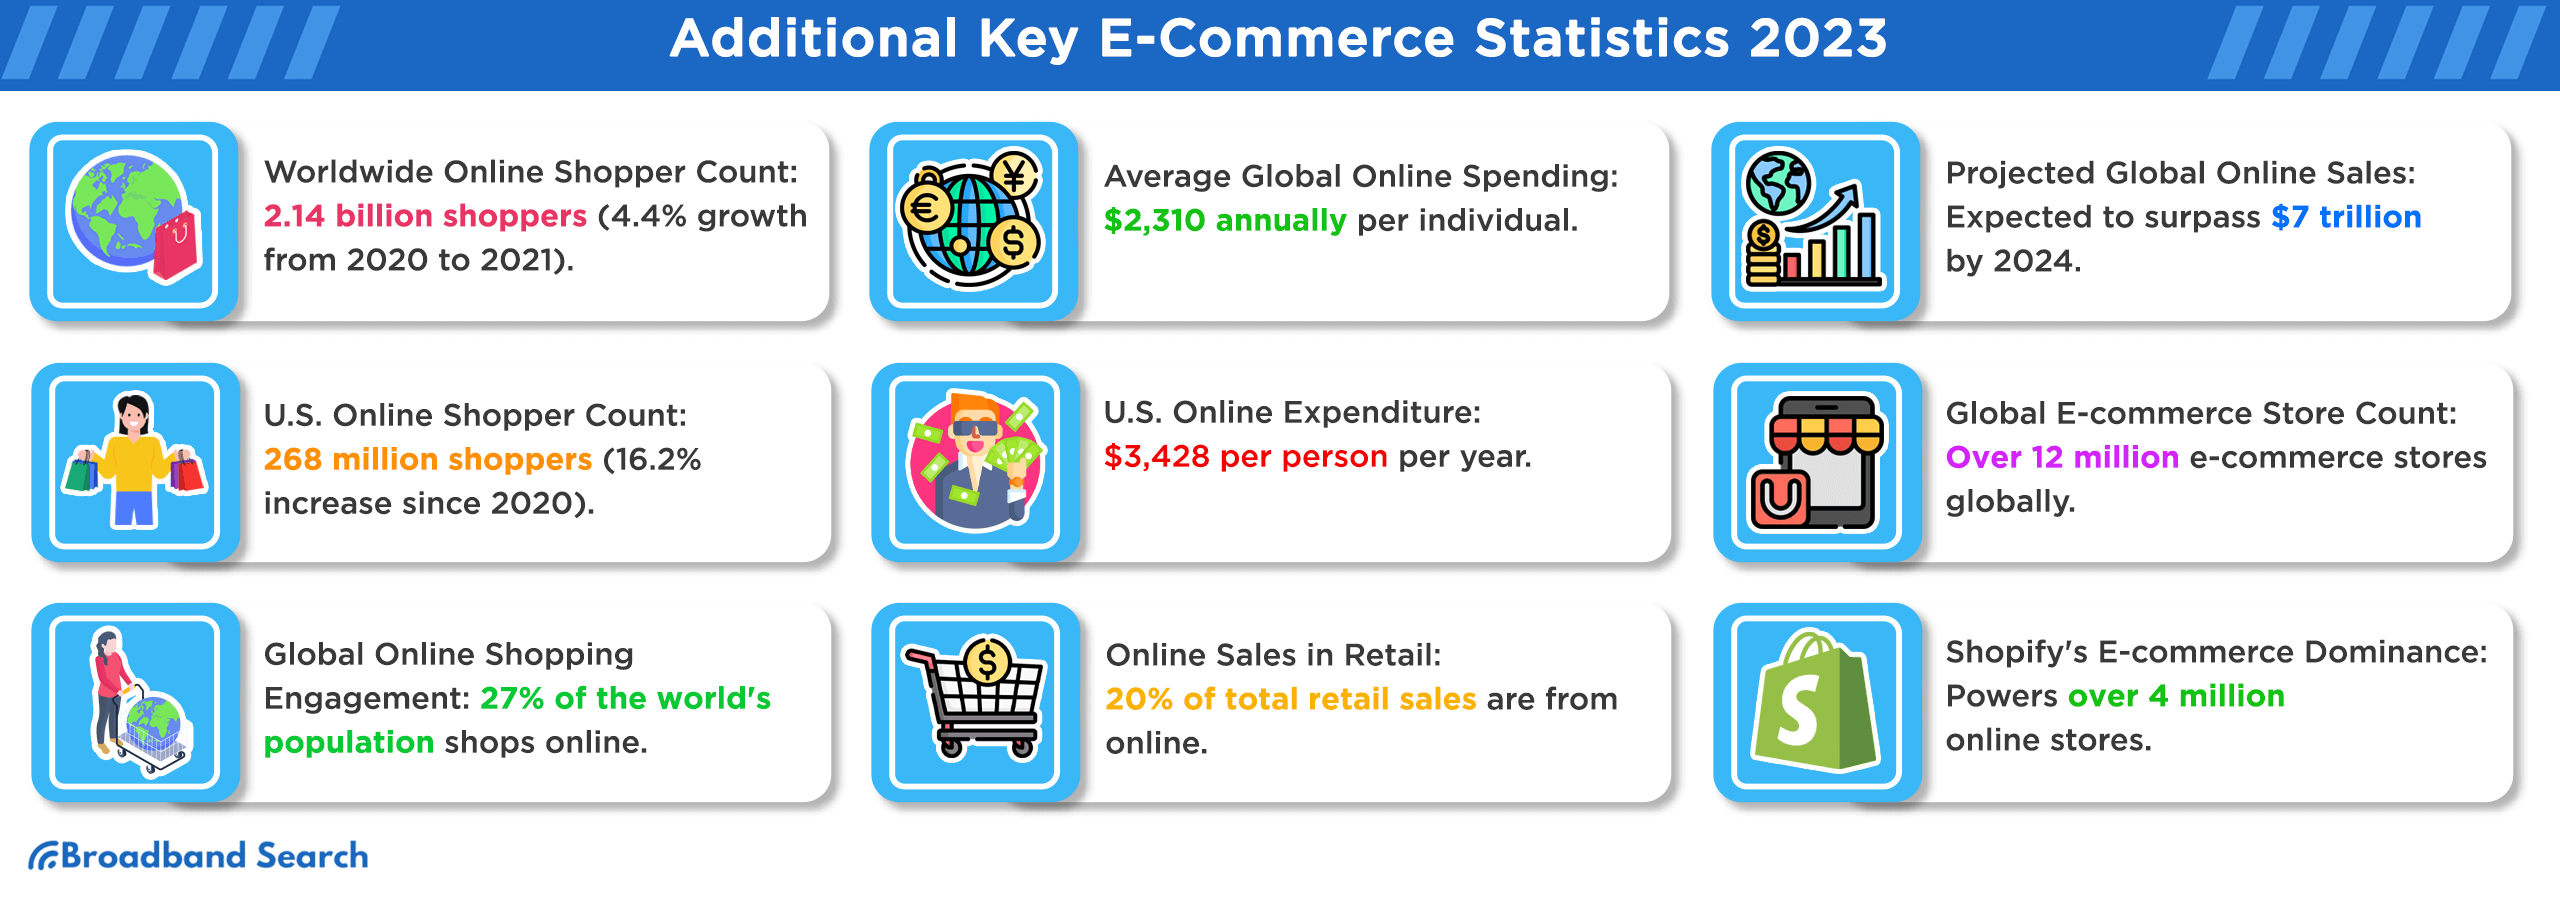 Additional Key E-commerce statistics for 2023